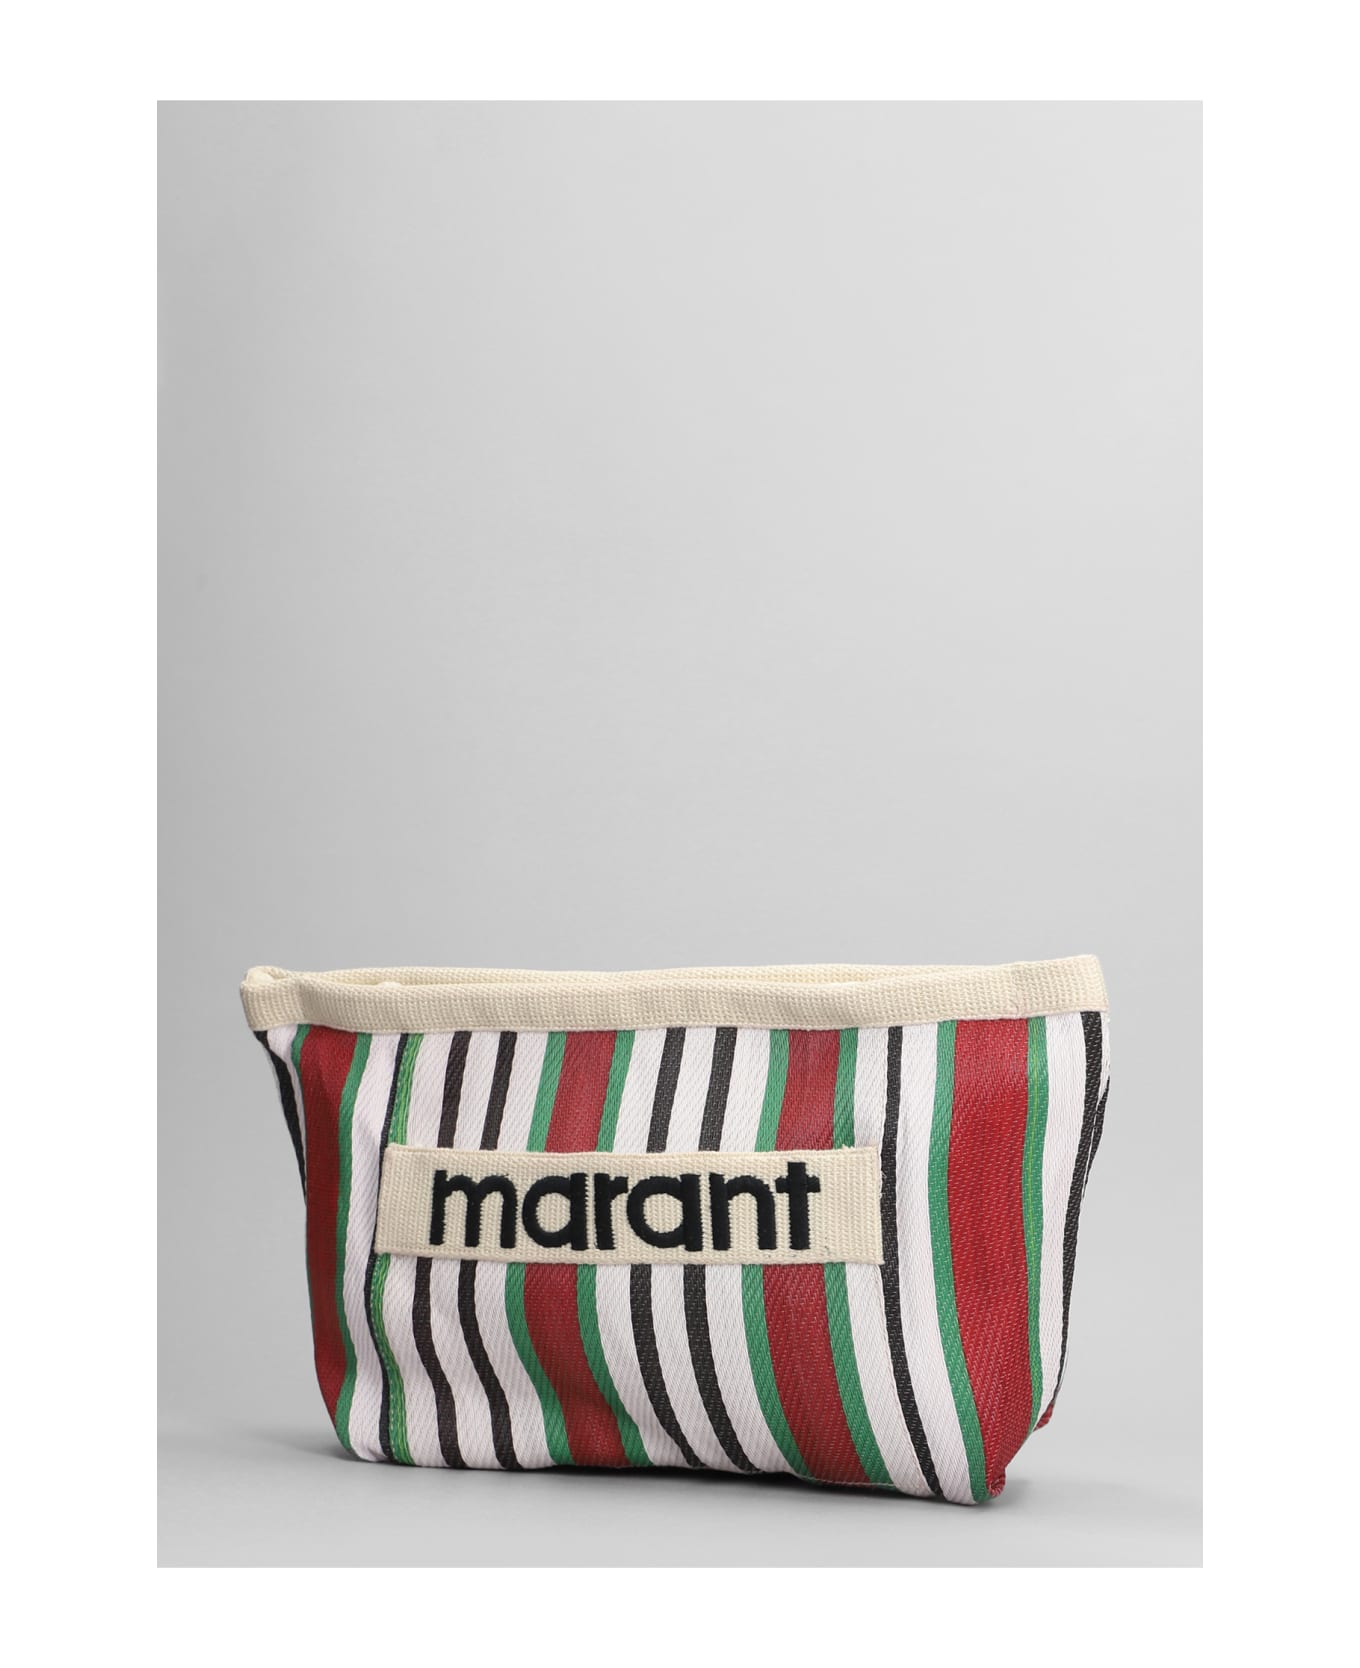 Isabel Marant Powden Clutch In Multicolor Nylon - multicolor クラッチバッグ